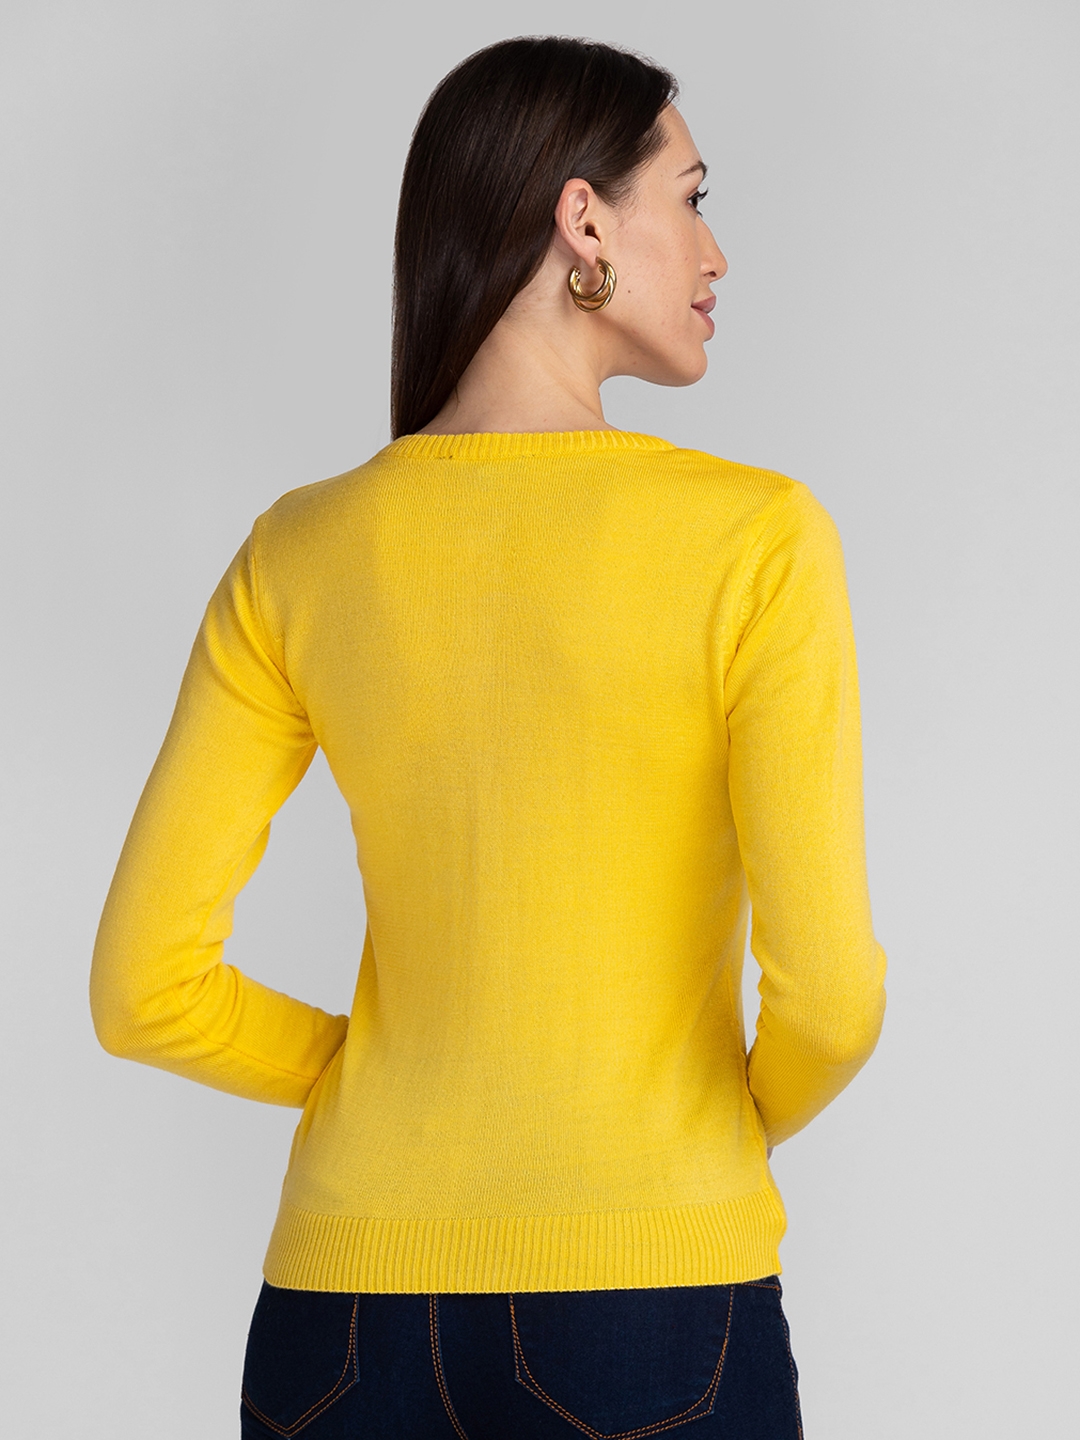 Globus Yellow Solid Cardigan Sweater